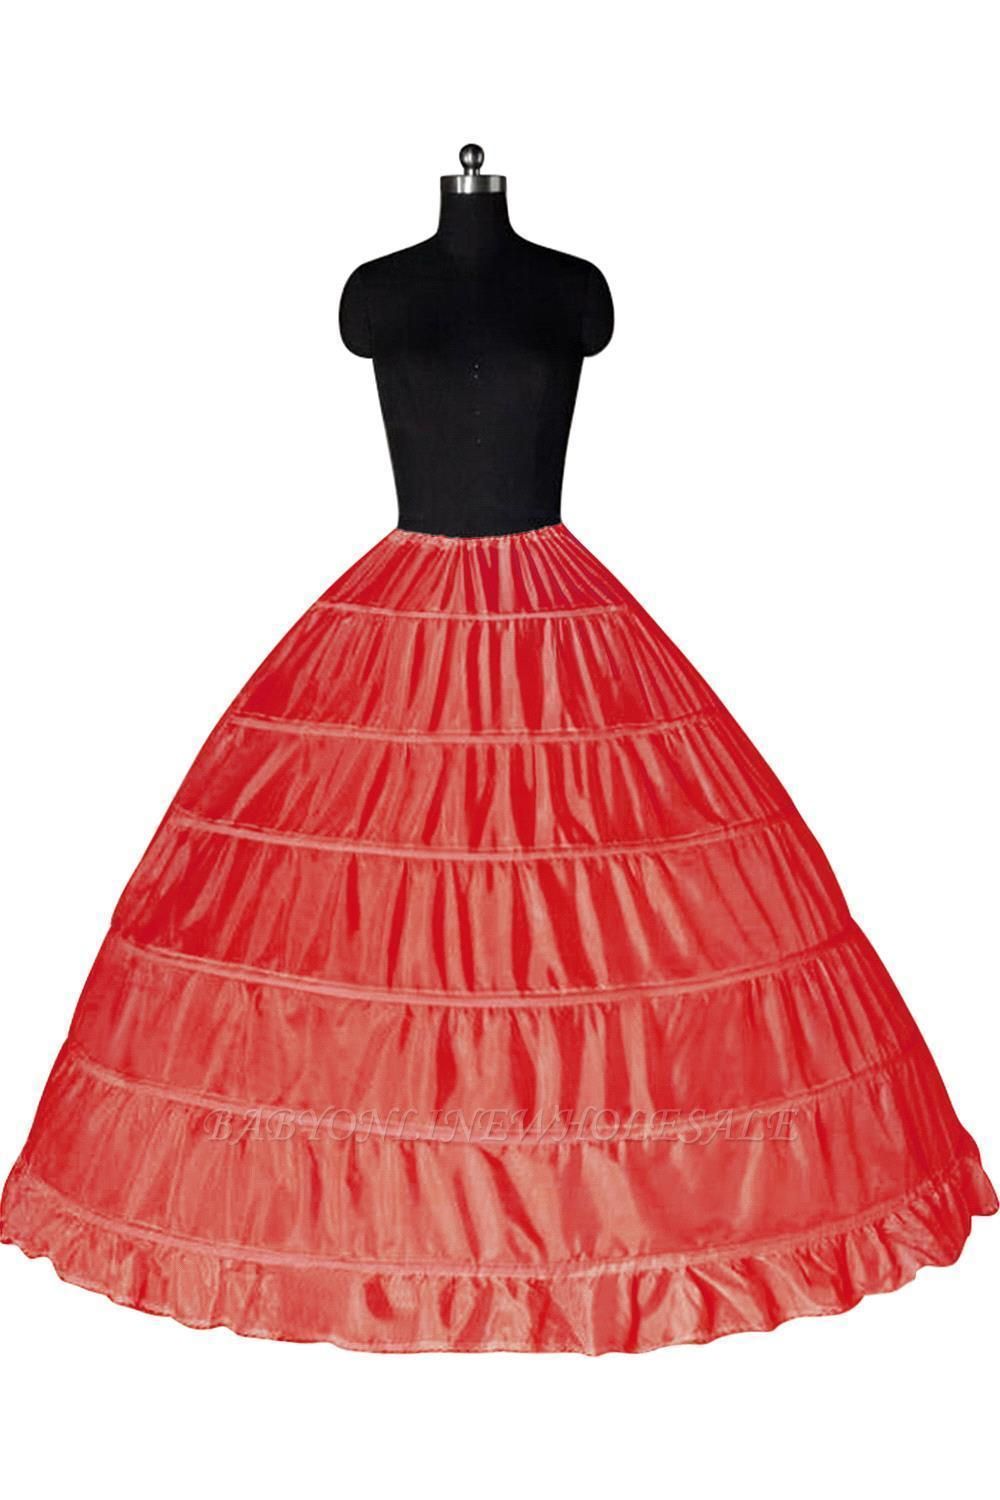 Colorful Taffeta Ball Gown Party Petticoats